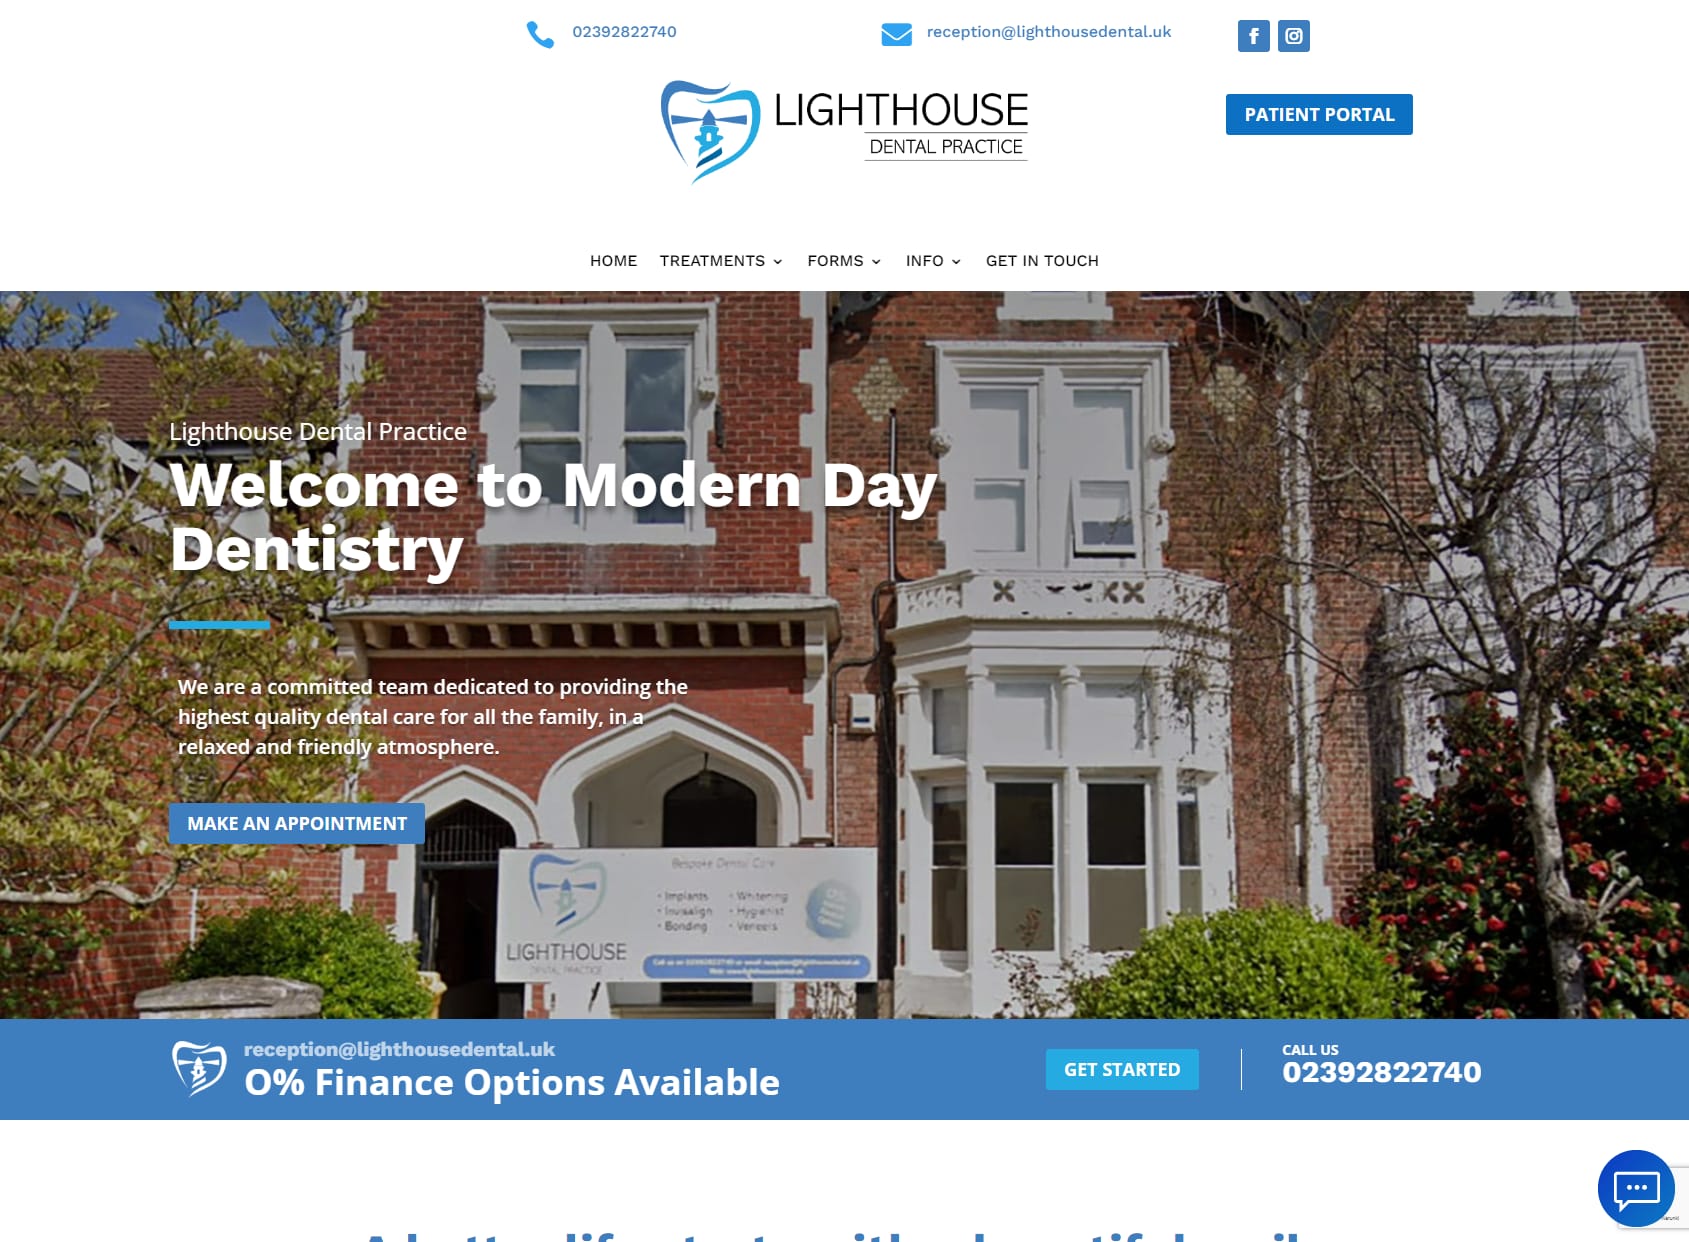 Lighthouse Dental Practice Ltd